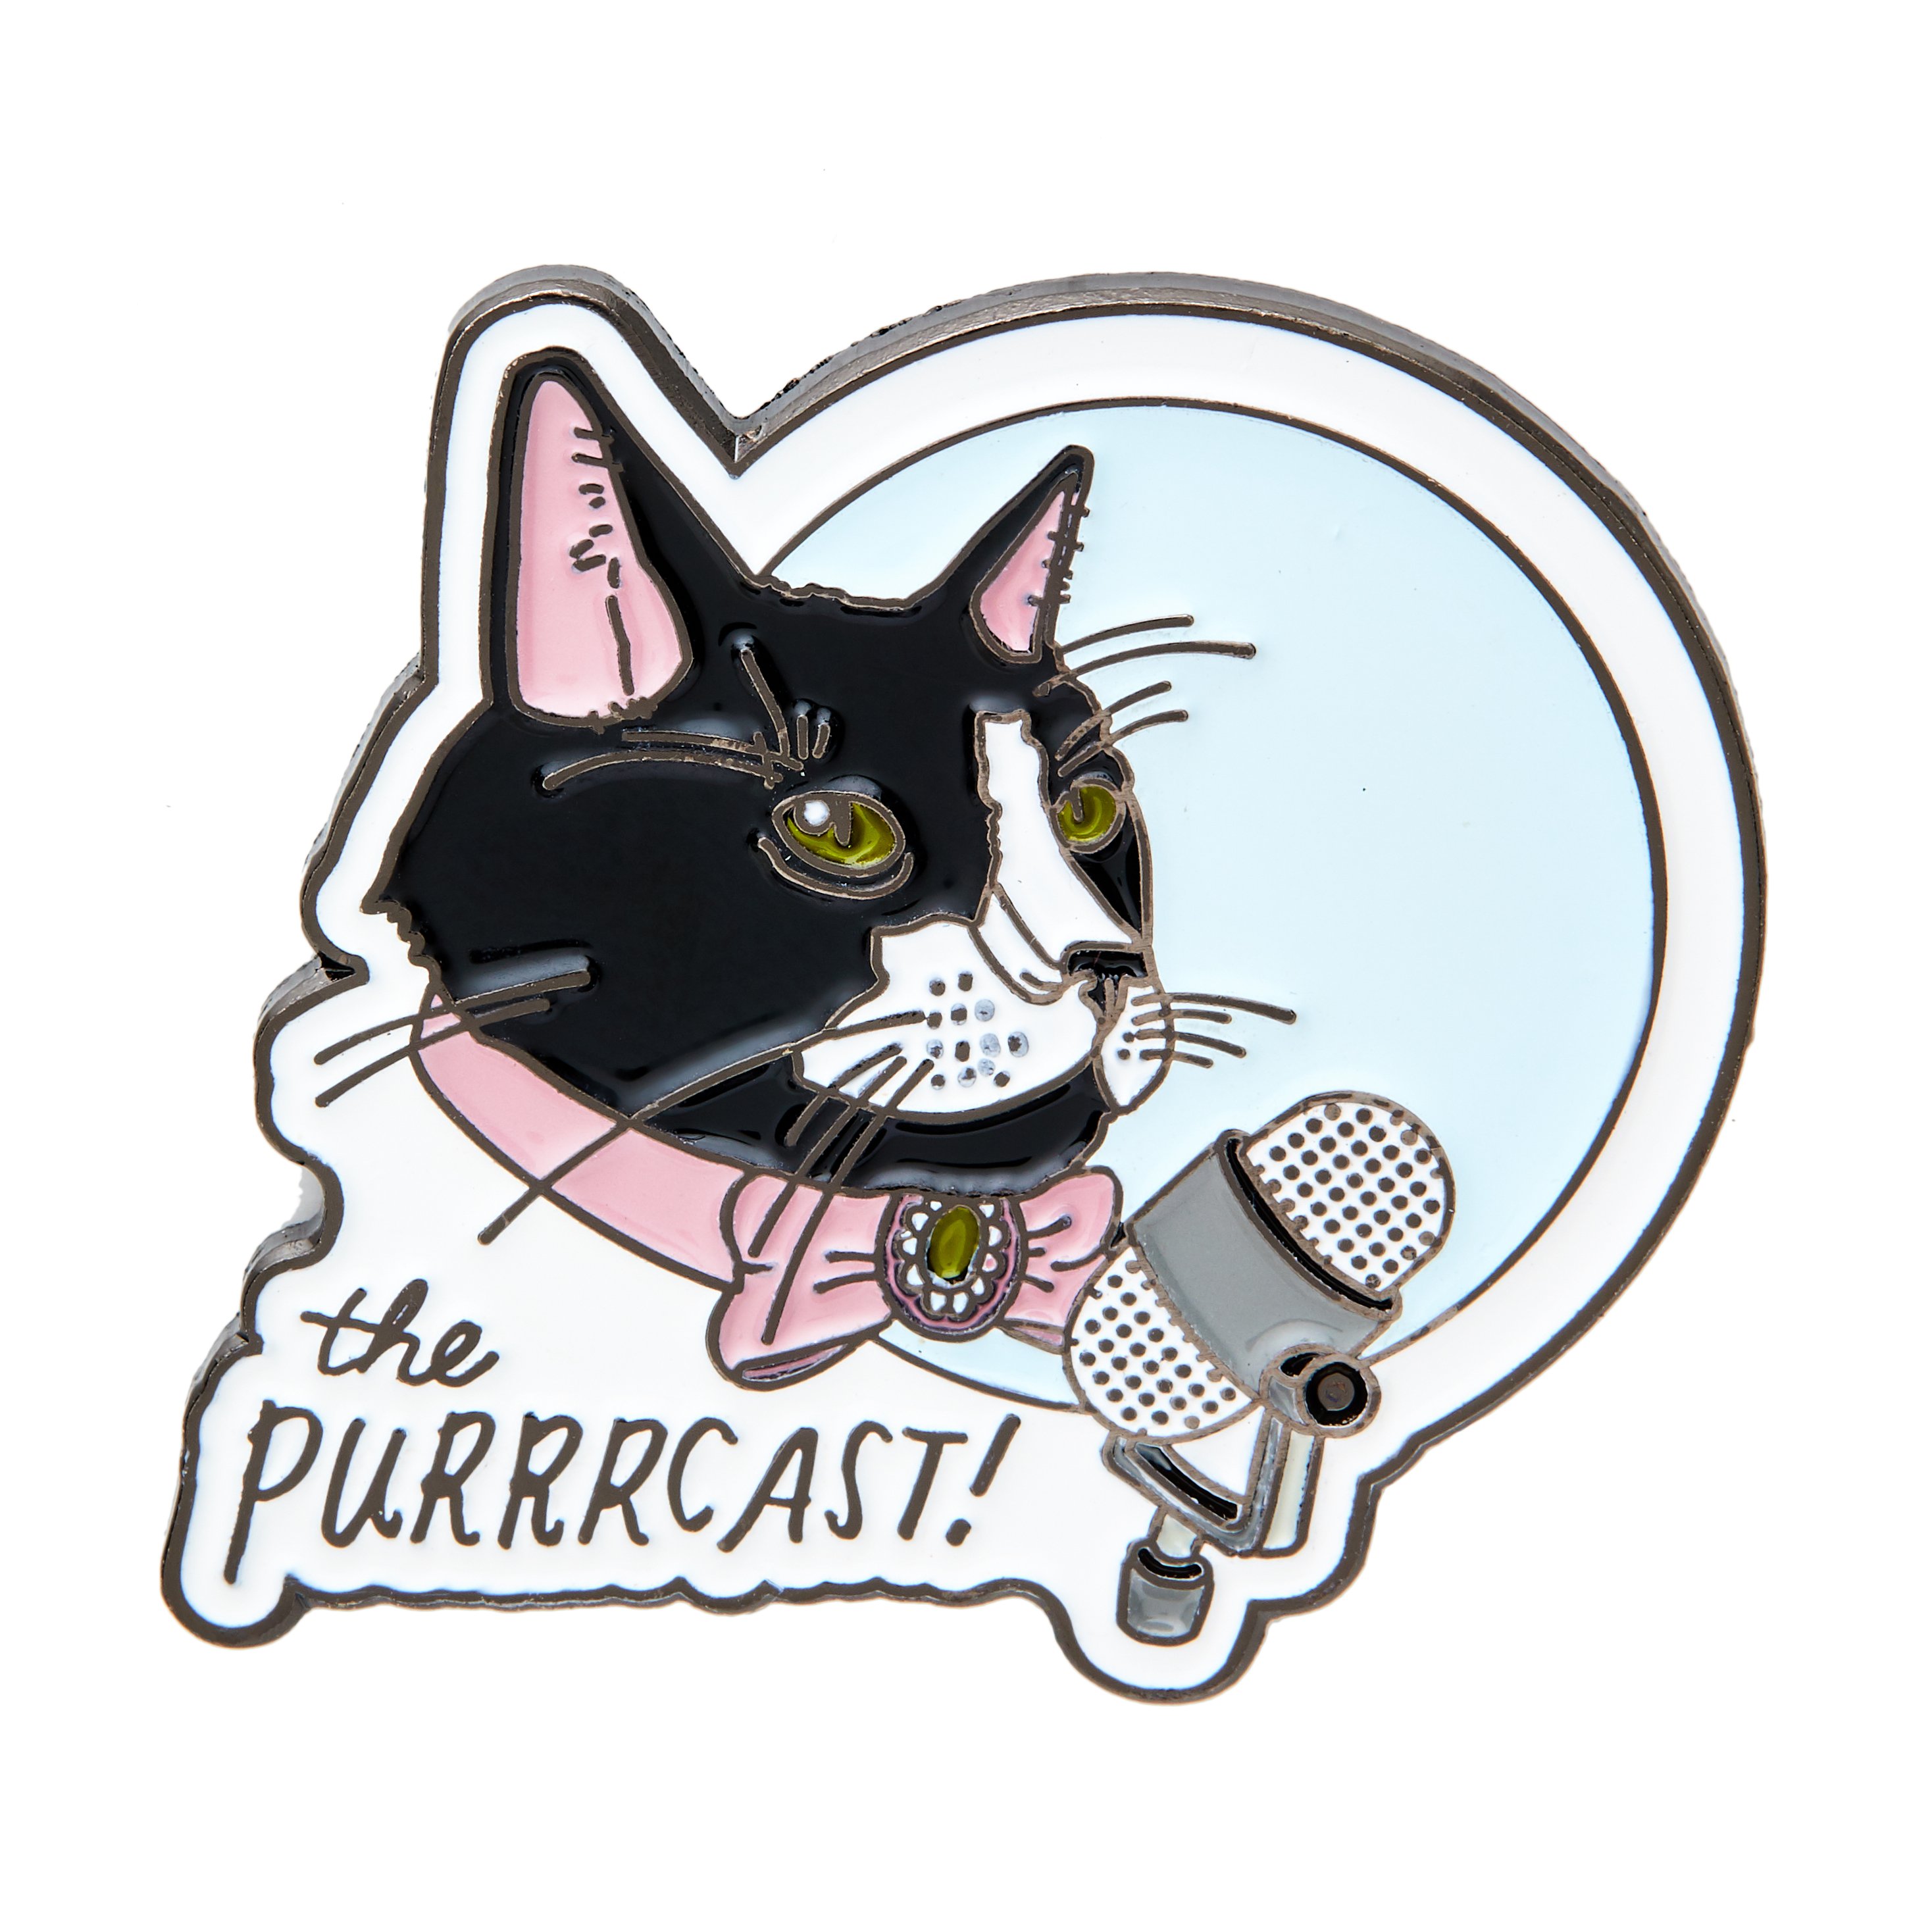 The Purrrcast: Enamel Pin